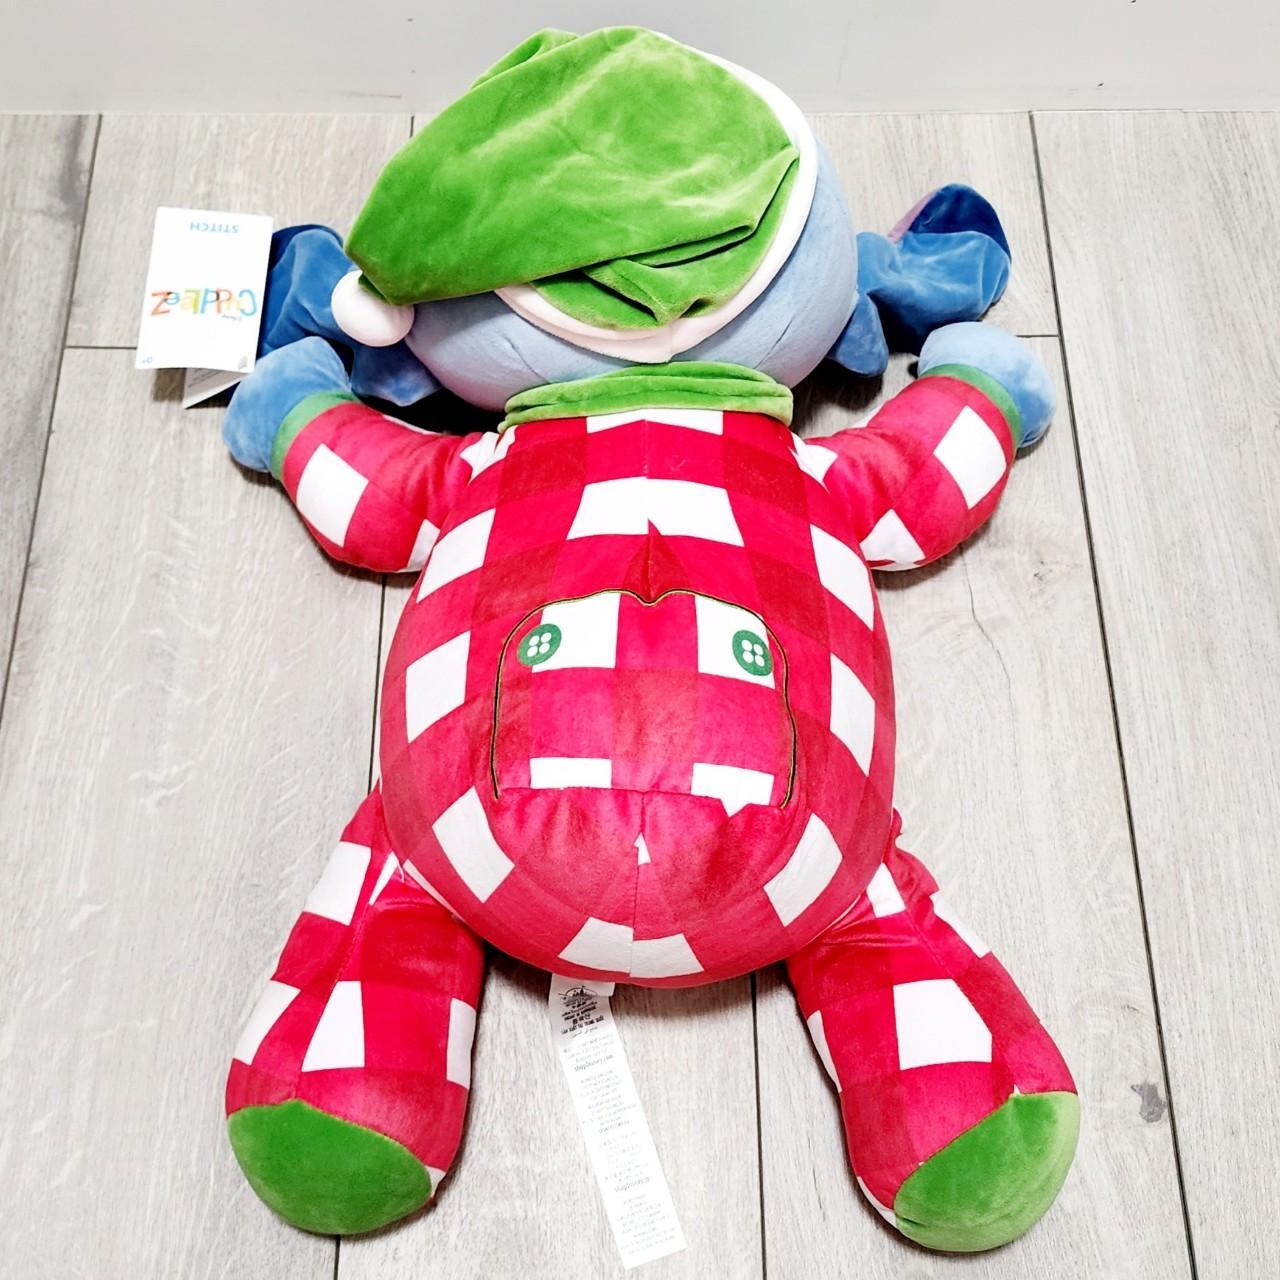 Disney Stitch Holiday Cuddleez Plush Stuffed Animal Plaid Pajamas